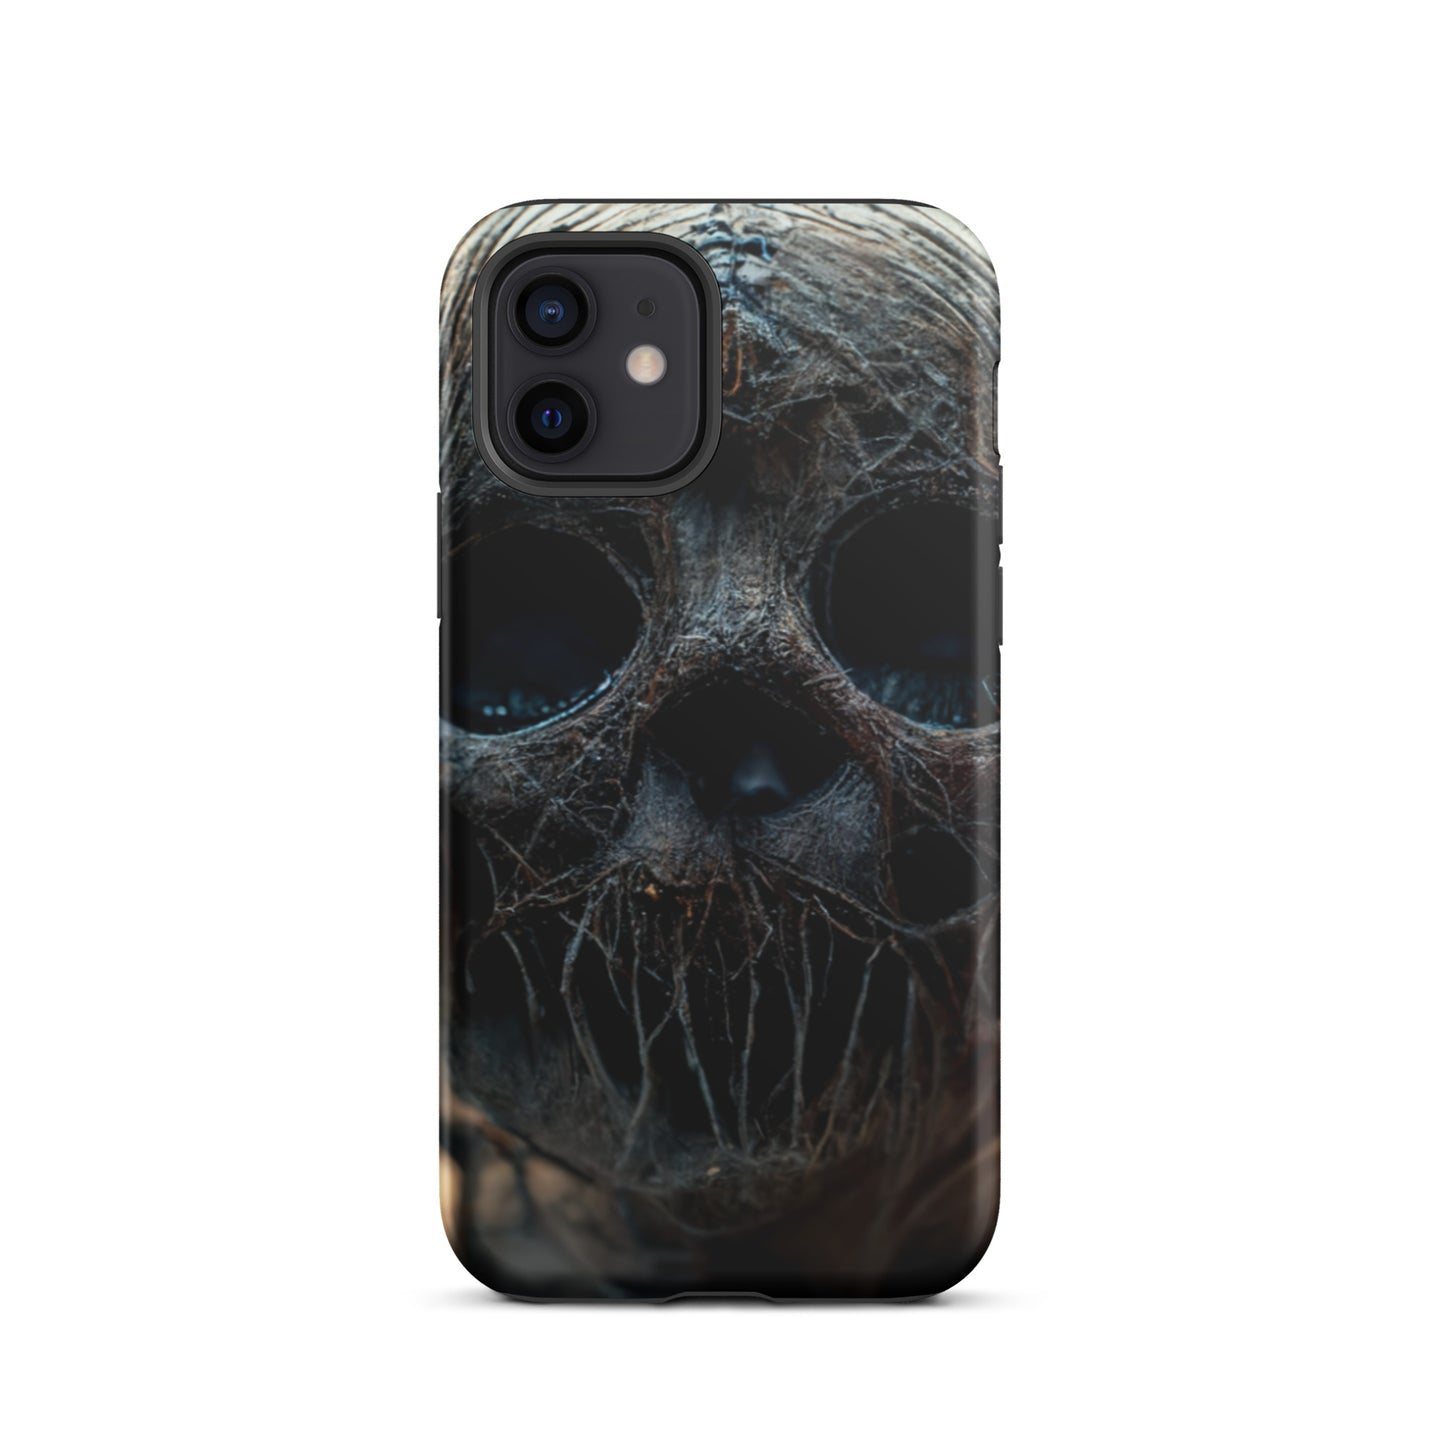 Maraheim Anansi 03 Tough iPhone case - Nick Olsson Digital Design